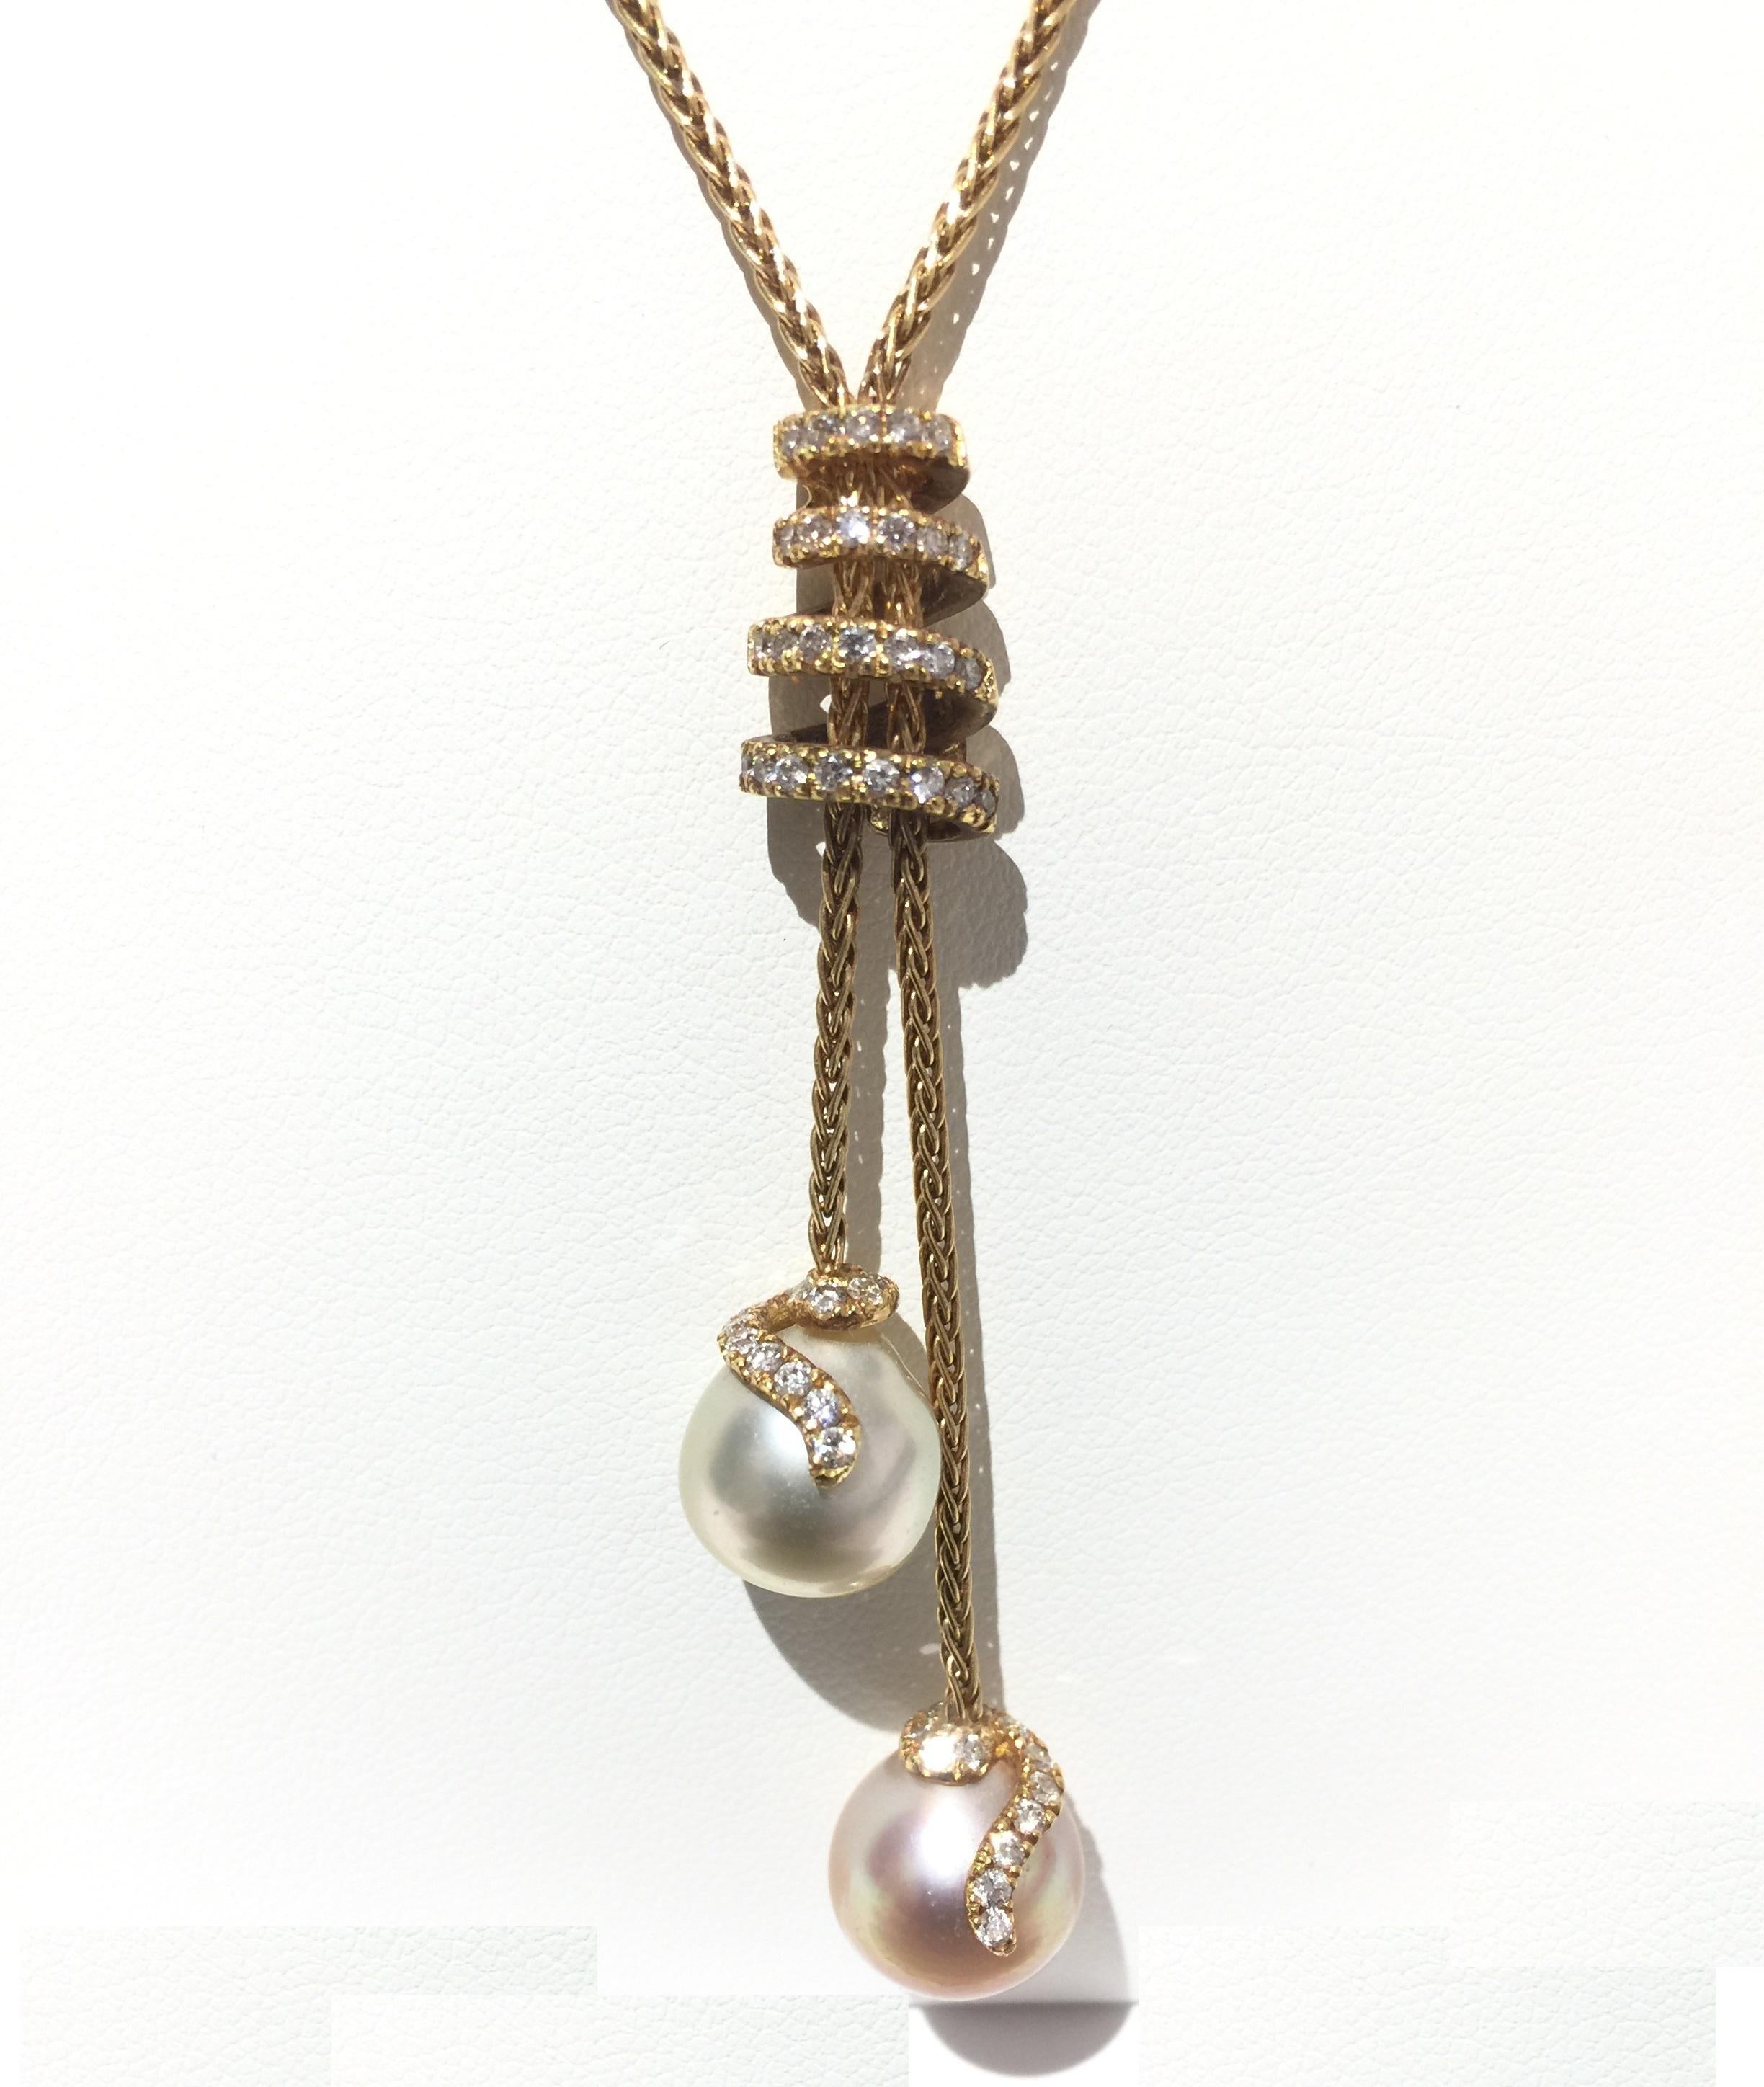 Yvel Pearls and Diamond Necklace.
18k Yellow Gold 
Pearls
Diamonds 0.65ctw
N2TIEGOBRY